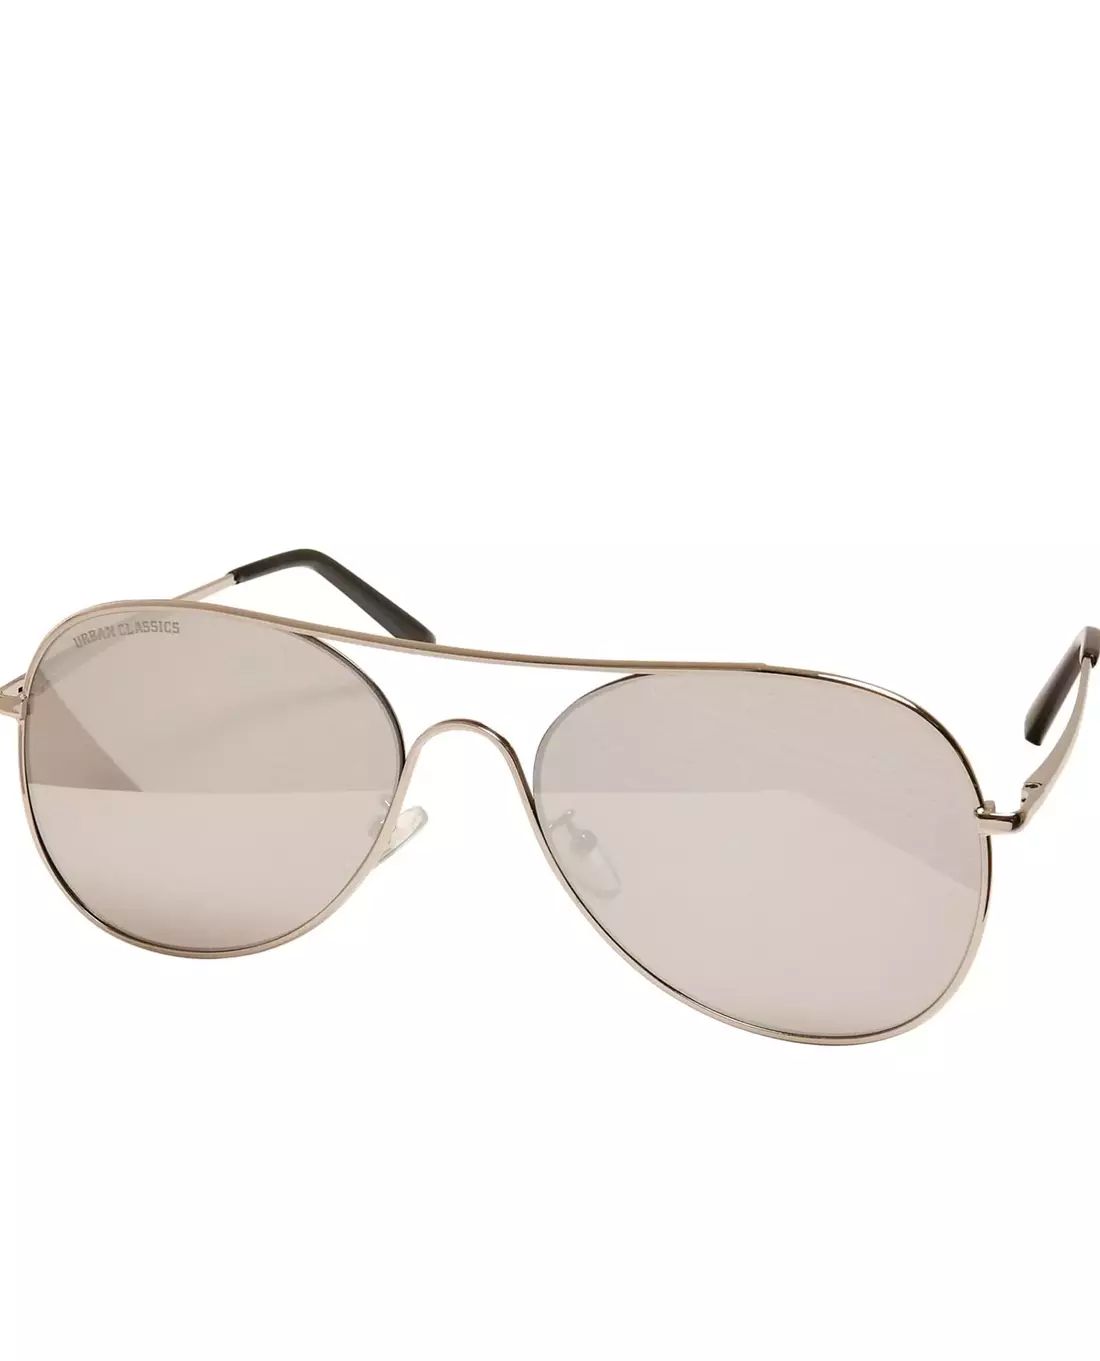 Sunglasses Texas Silver Urban Classics